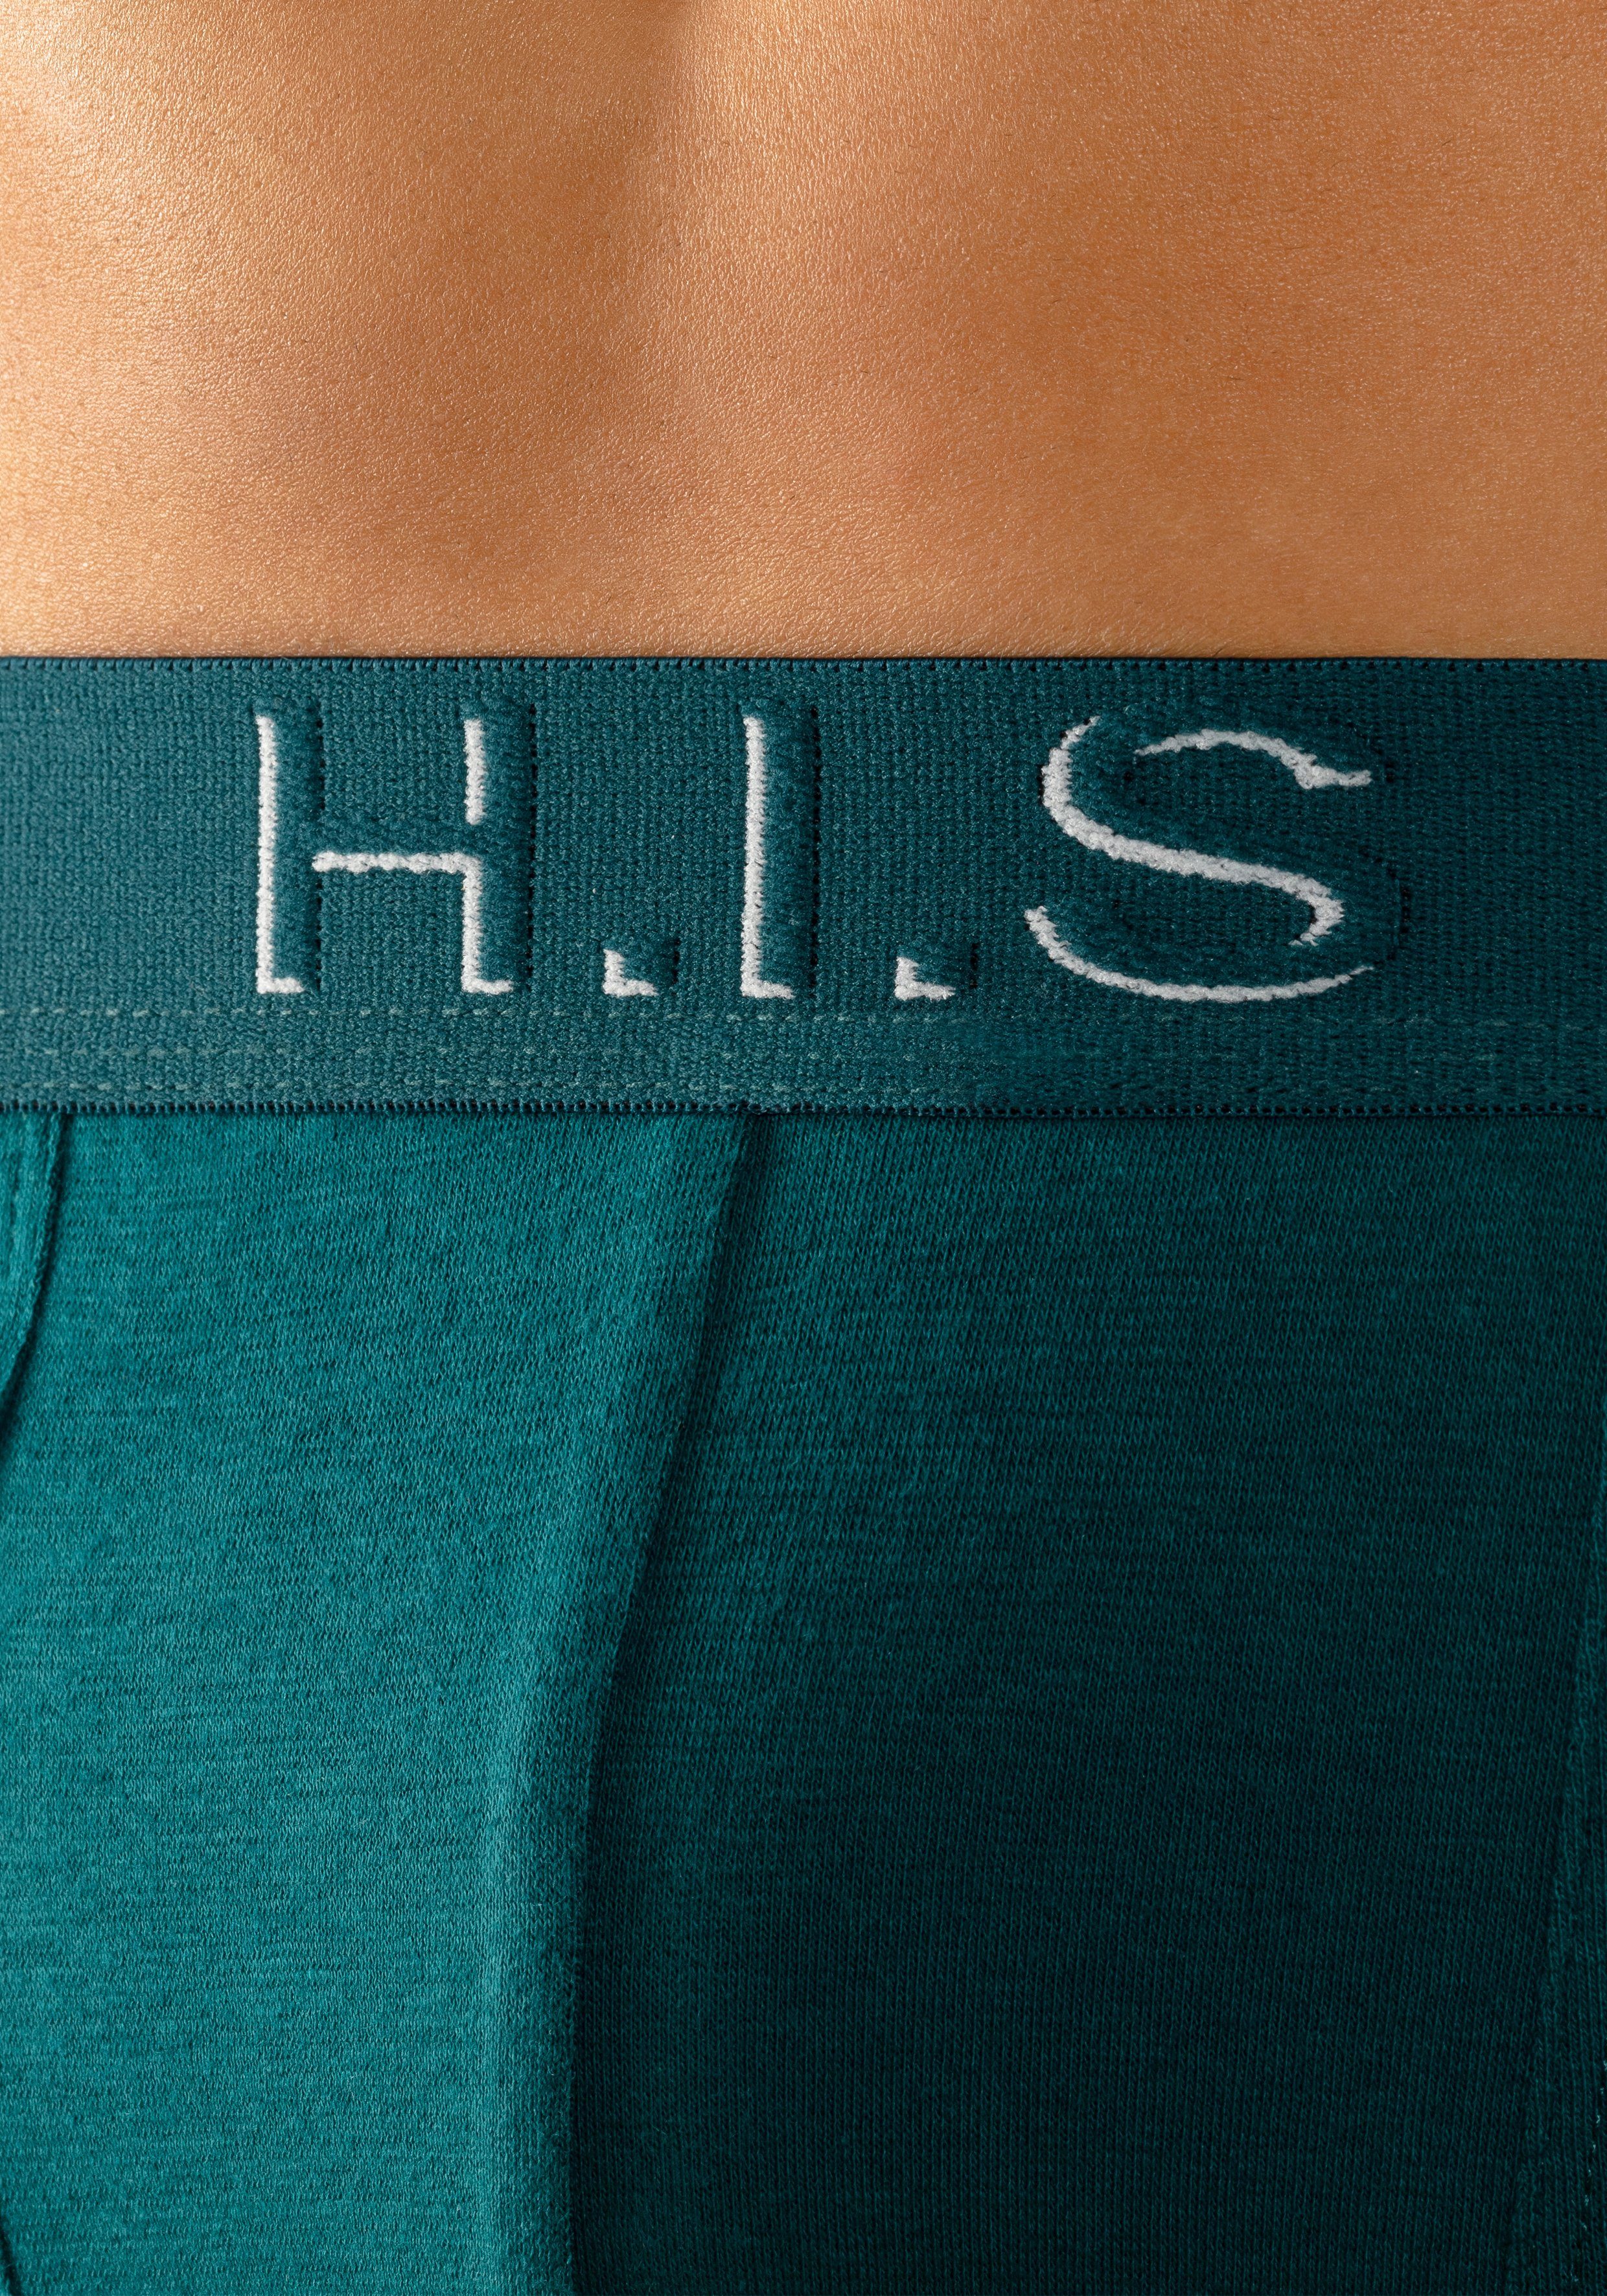 Hipster-Form mit in bordeaux, H.I.S 3D Logoschriftzug Effekt 5-St) mit schwarz, olivgrün, Webbund am petrol, navy (Packung, Boxershorts